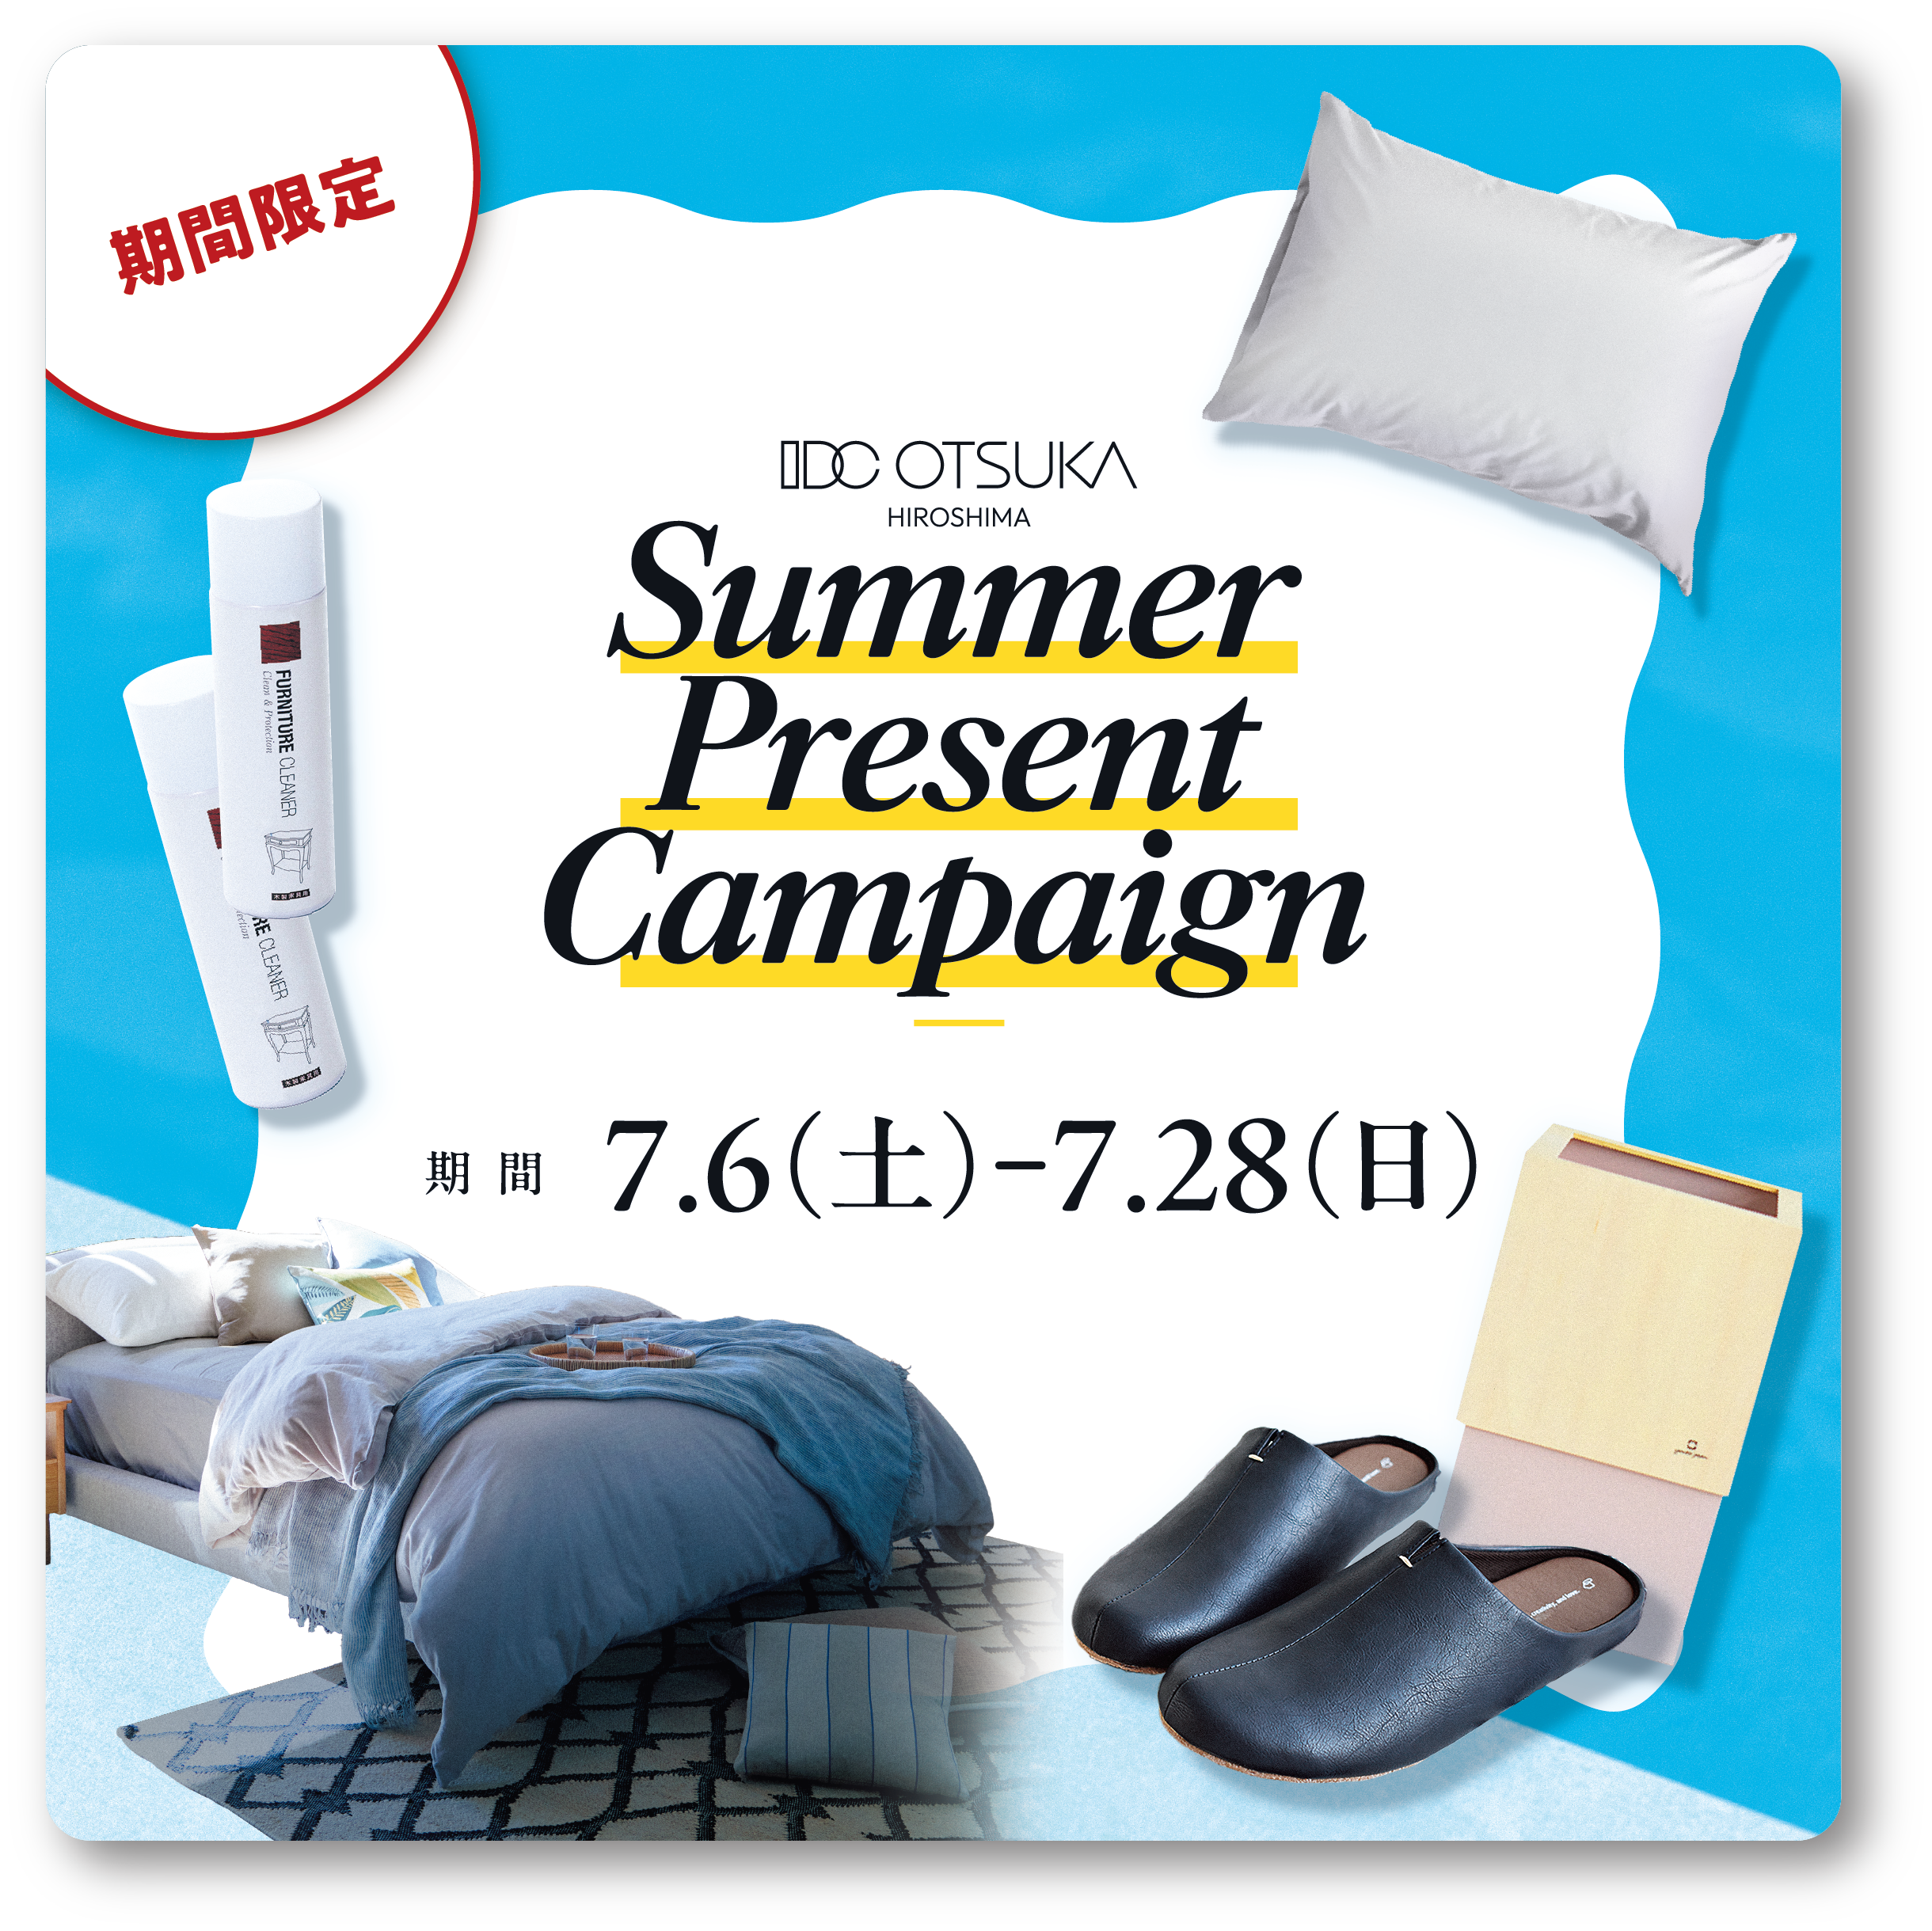 Summer Present Campaign